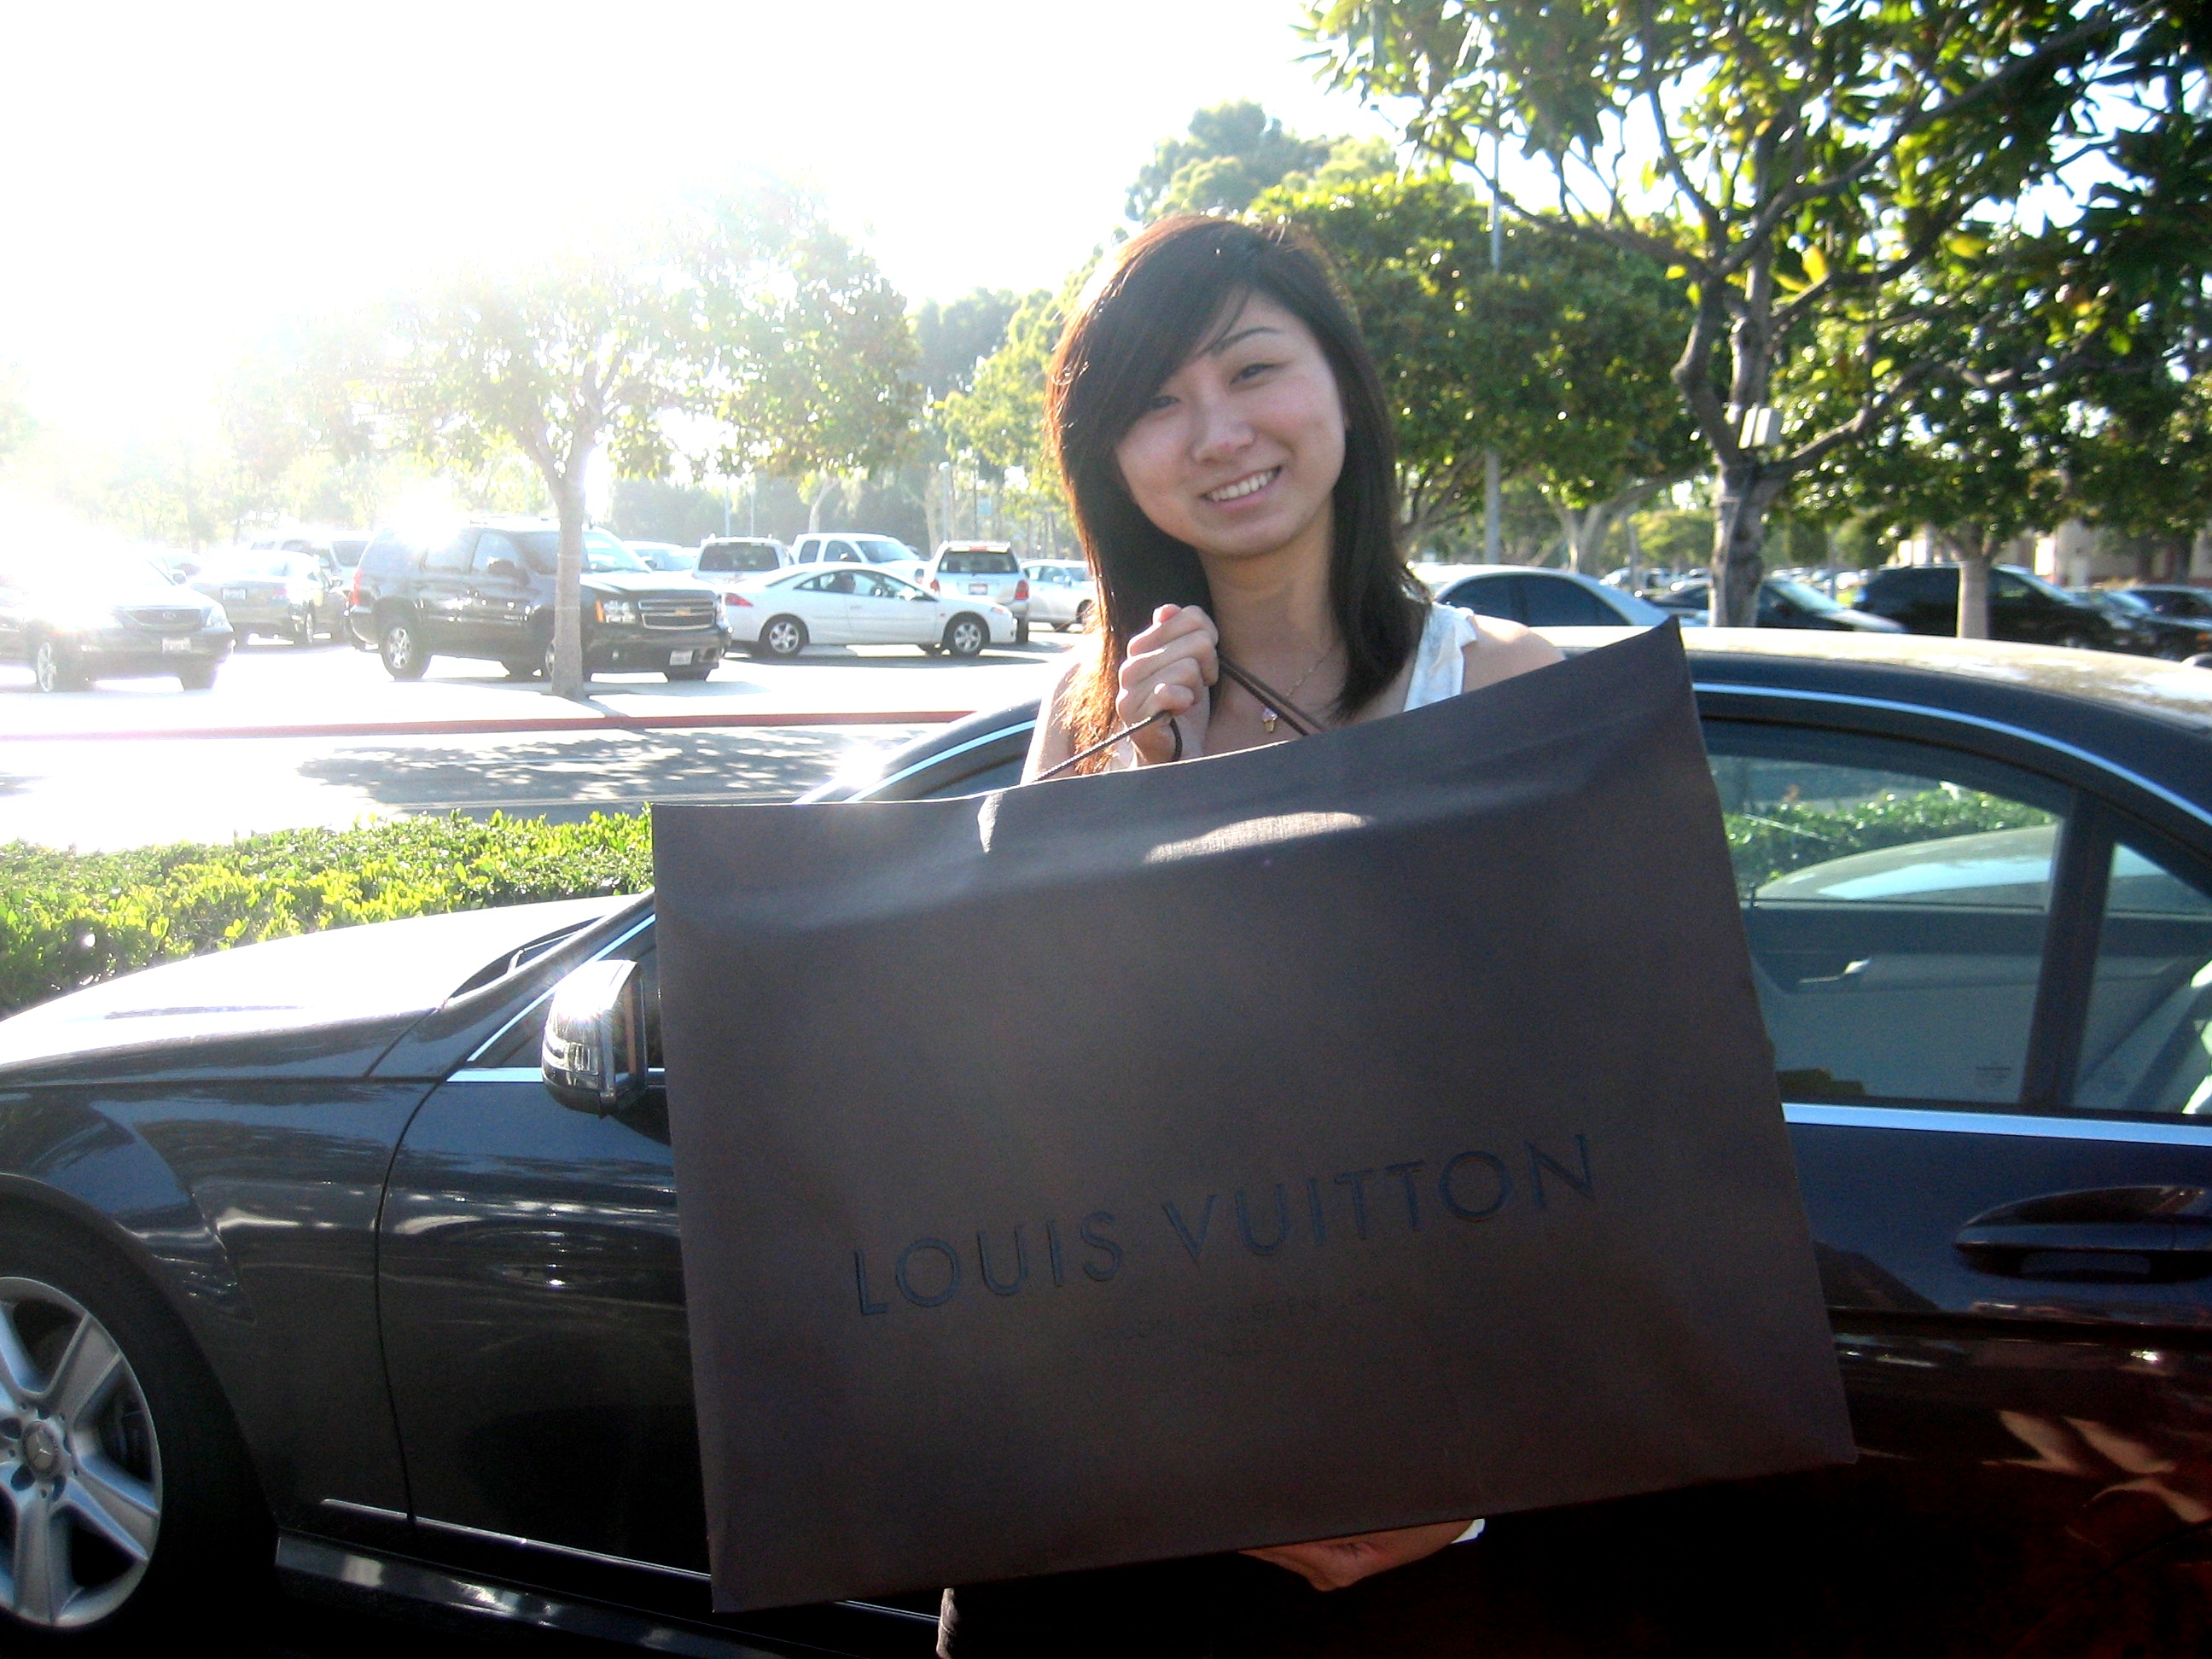 Louis Vuitton 2009 pre-owned Trevi PM Handbag - Farfetch